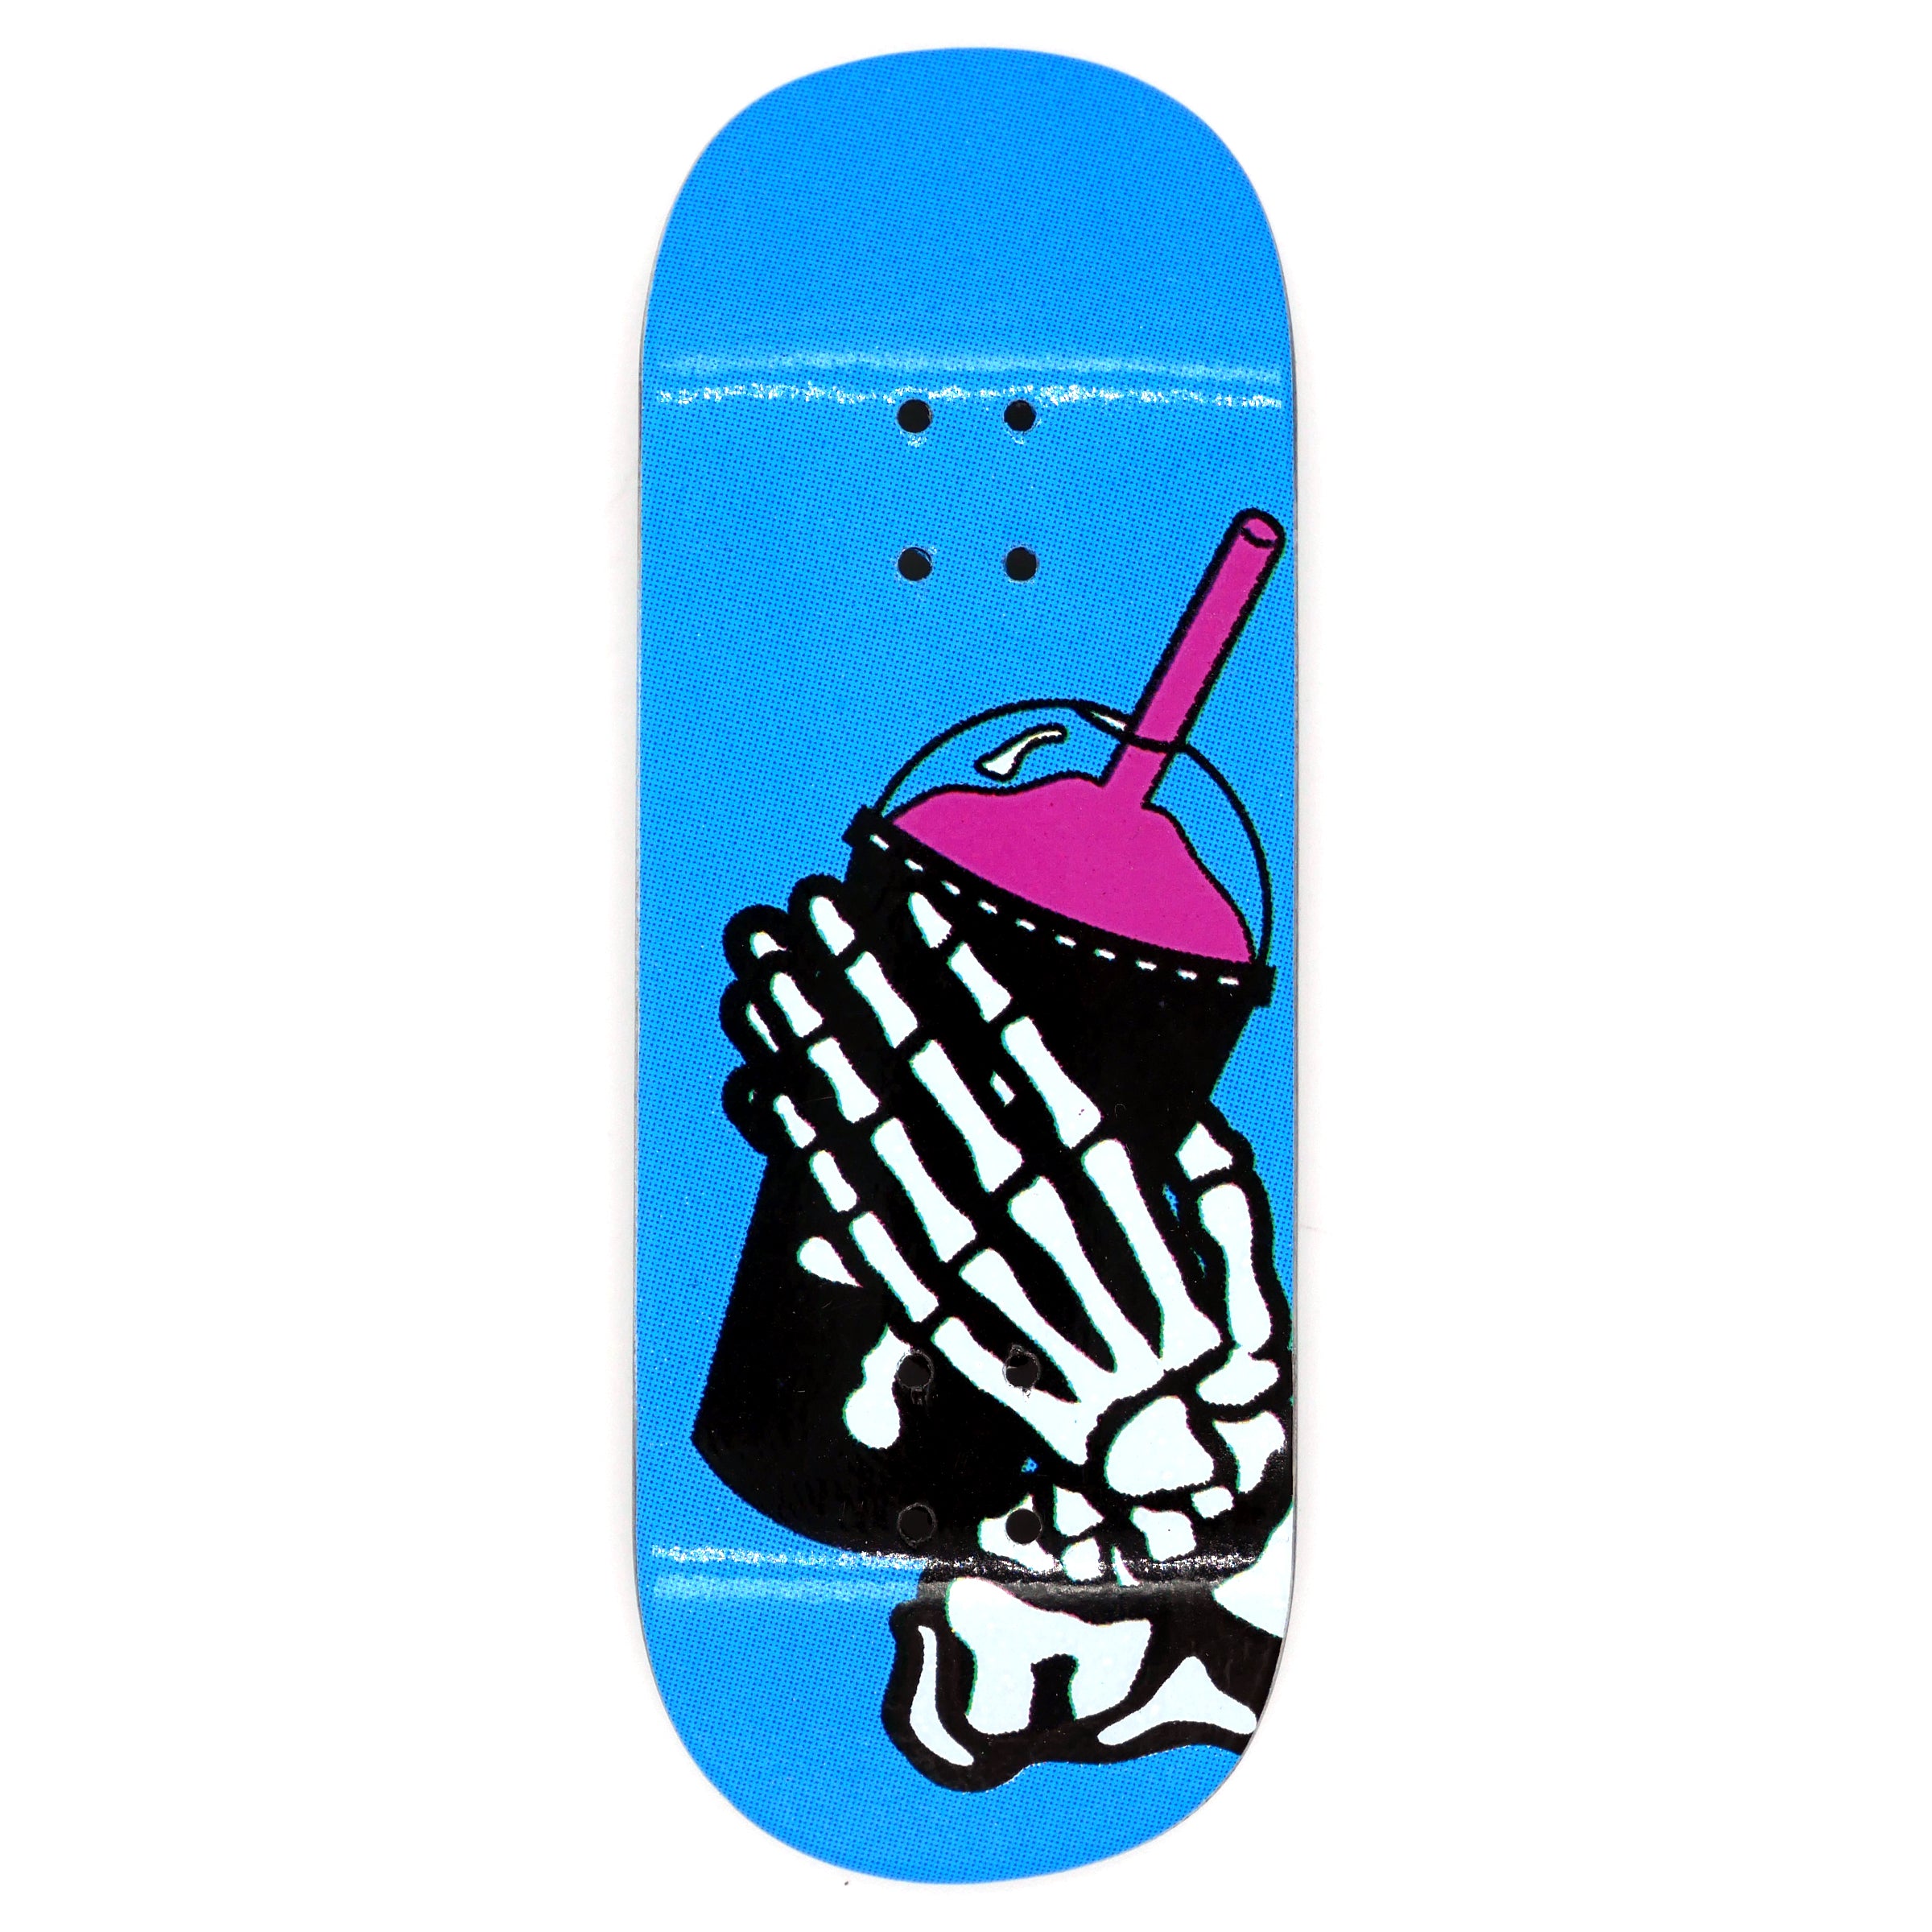 Slushcult "Slushgod Bones" Shop Fingerboard Deck (Limited Black Plies) MINI Skate Shop Slushcult    Slushcult